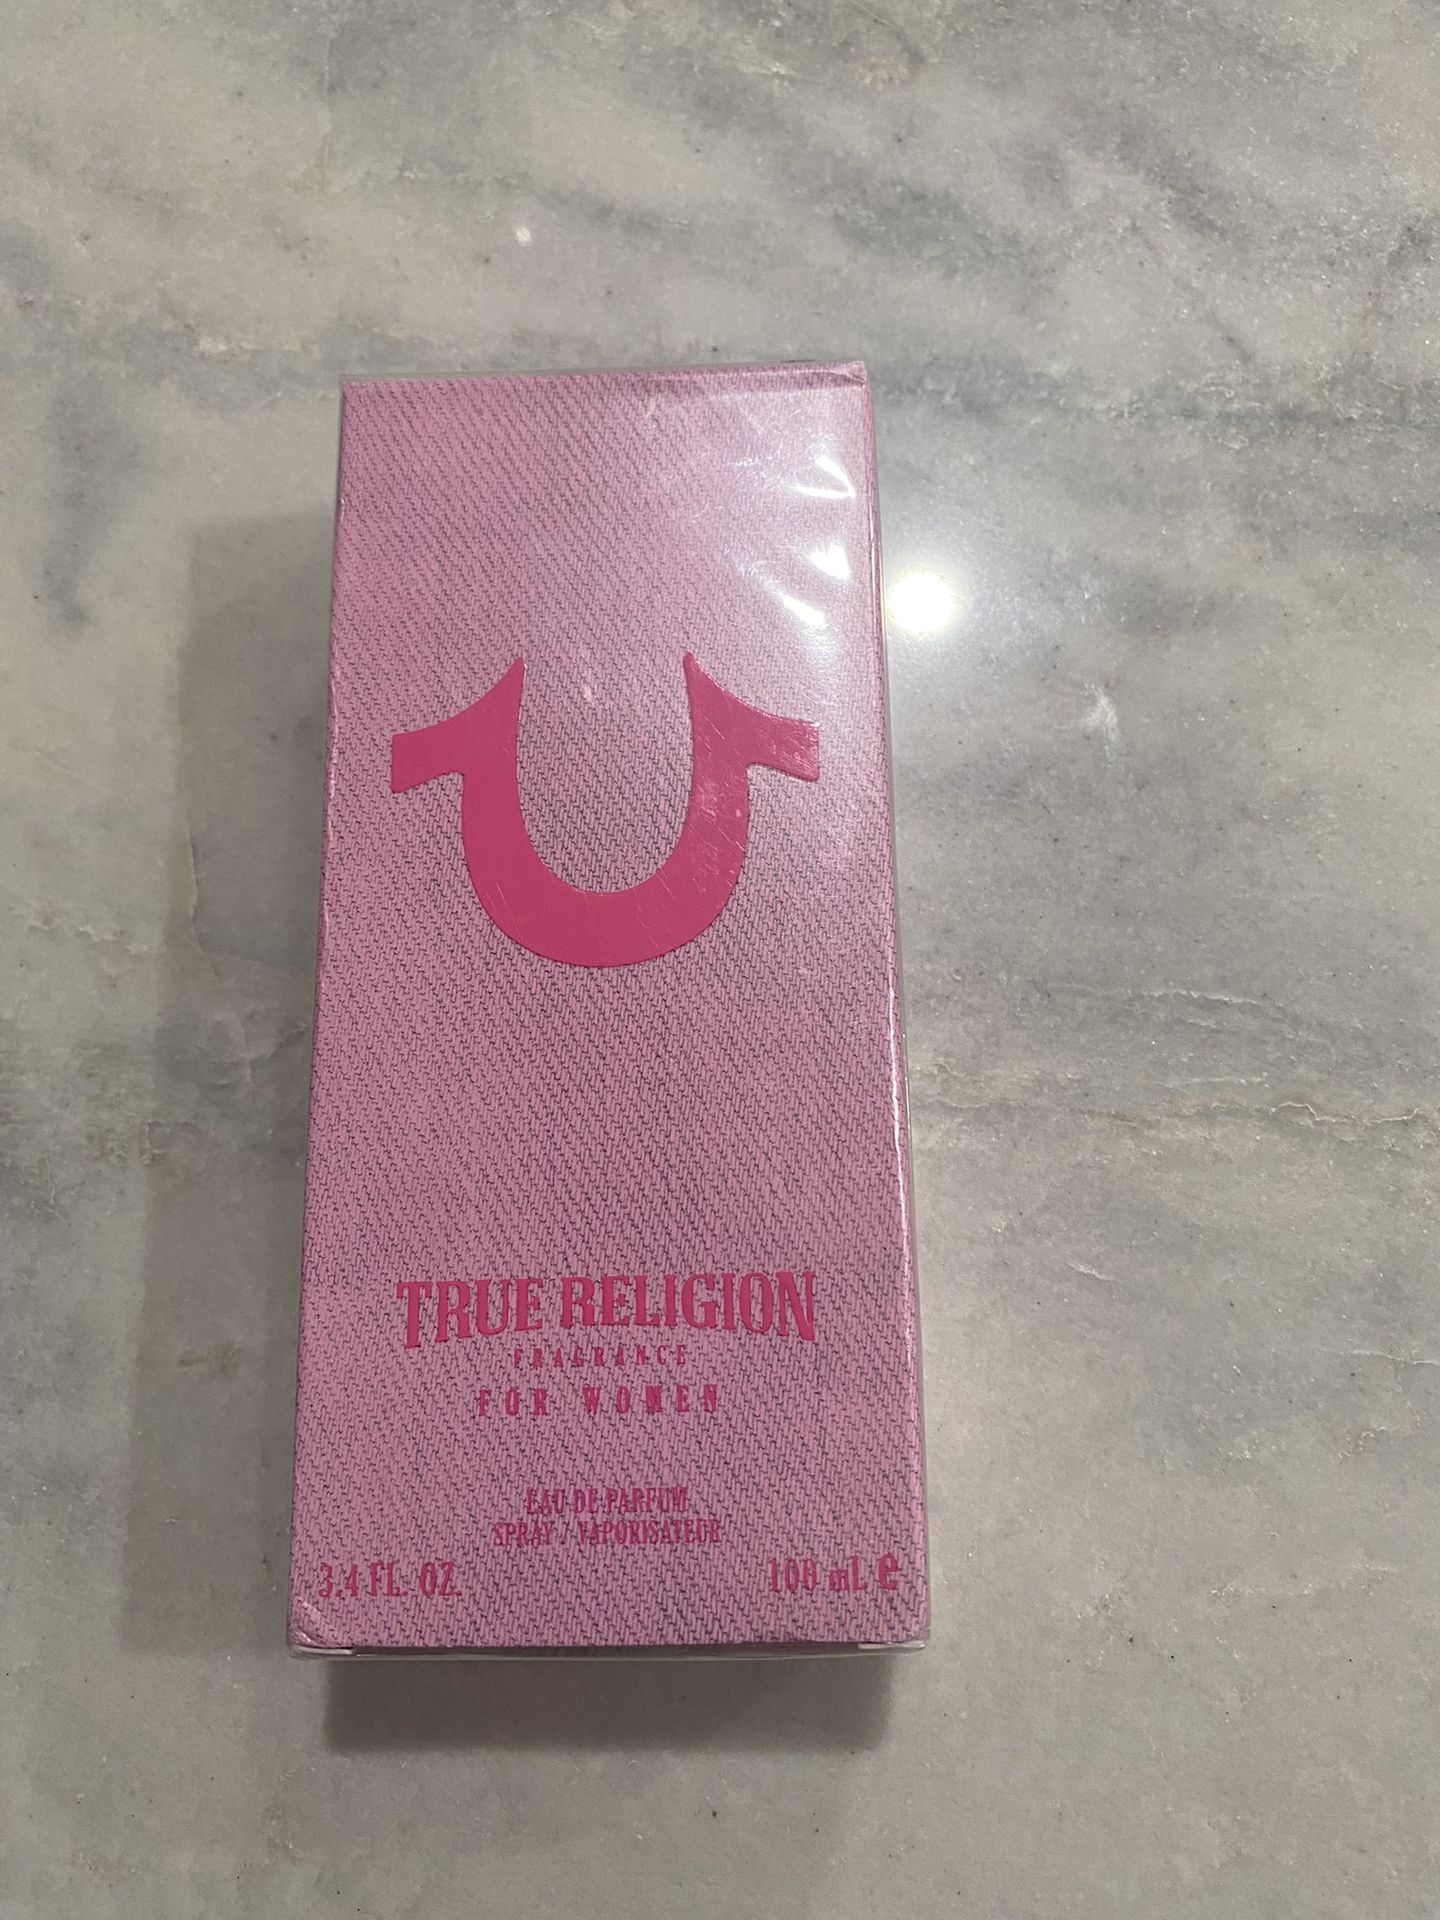 True Religion Perfume